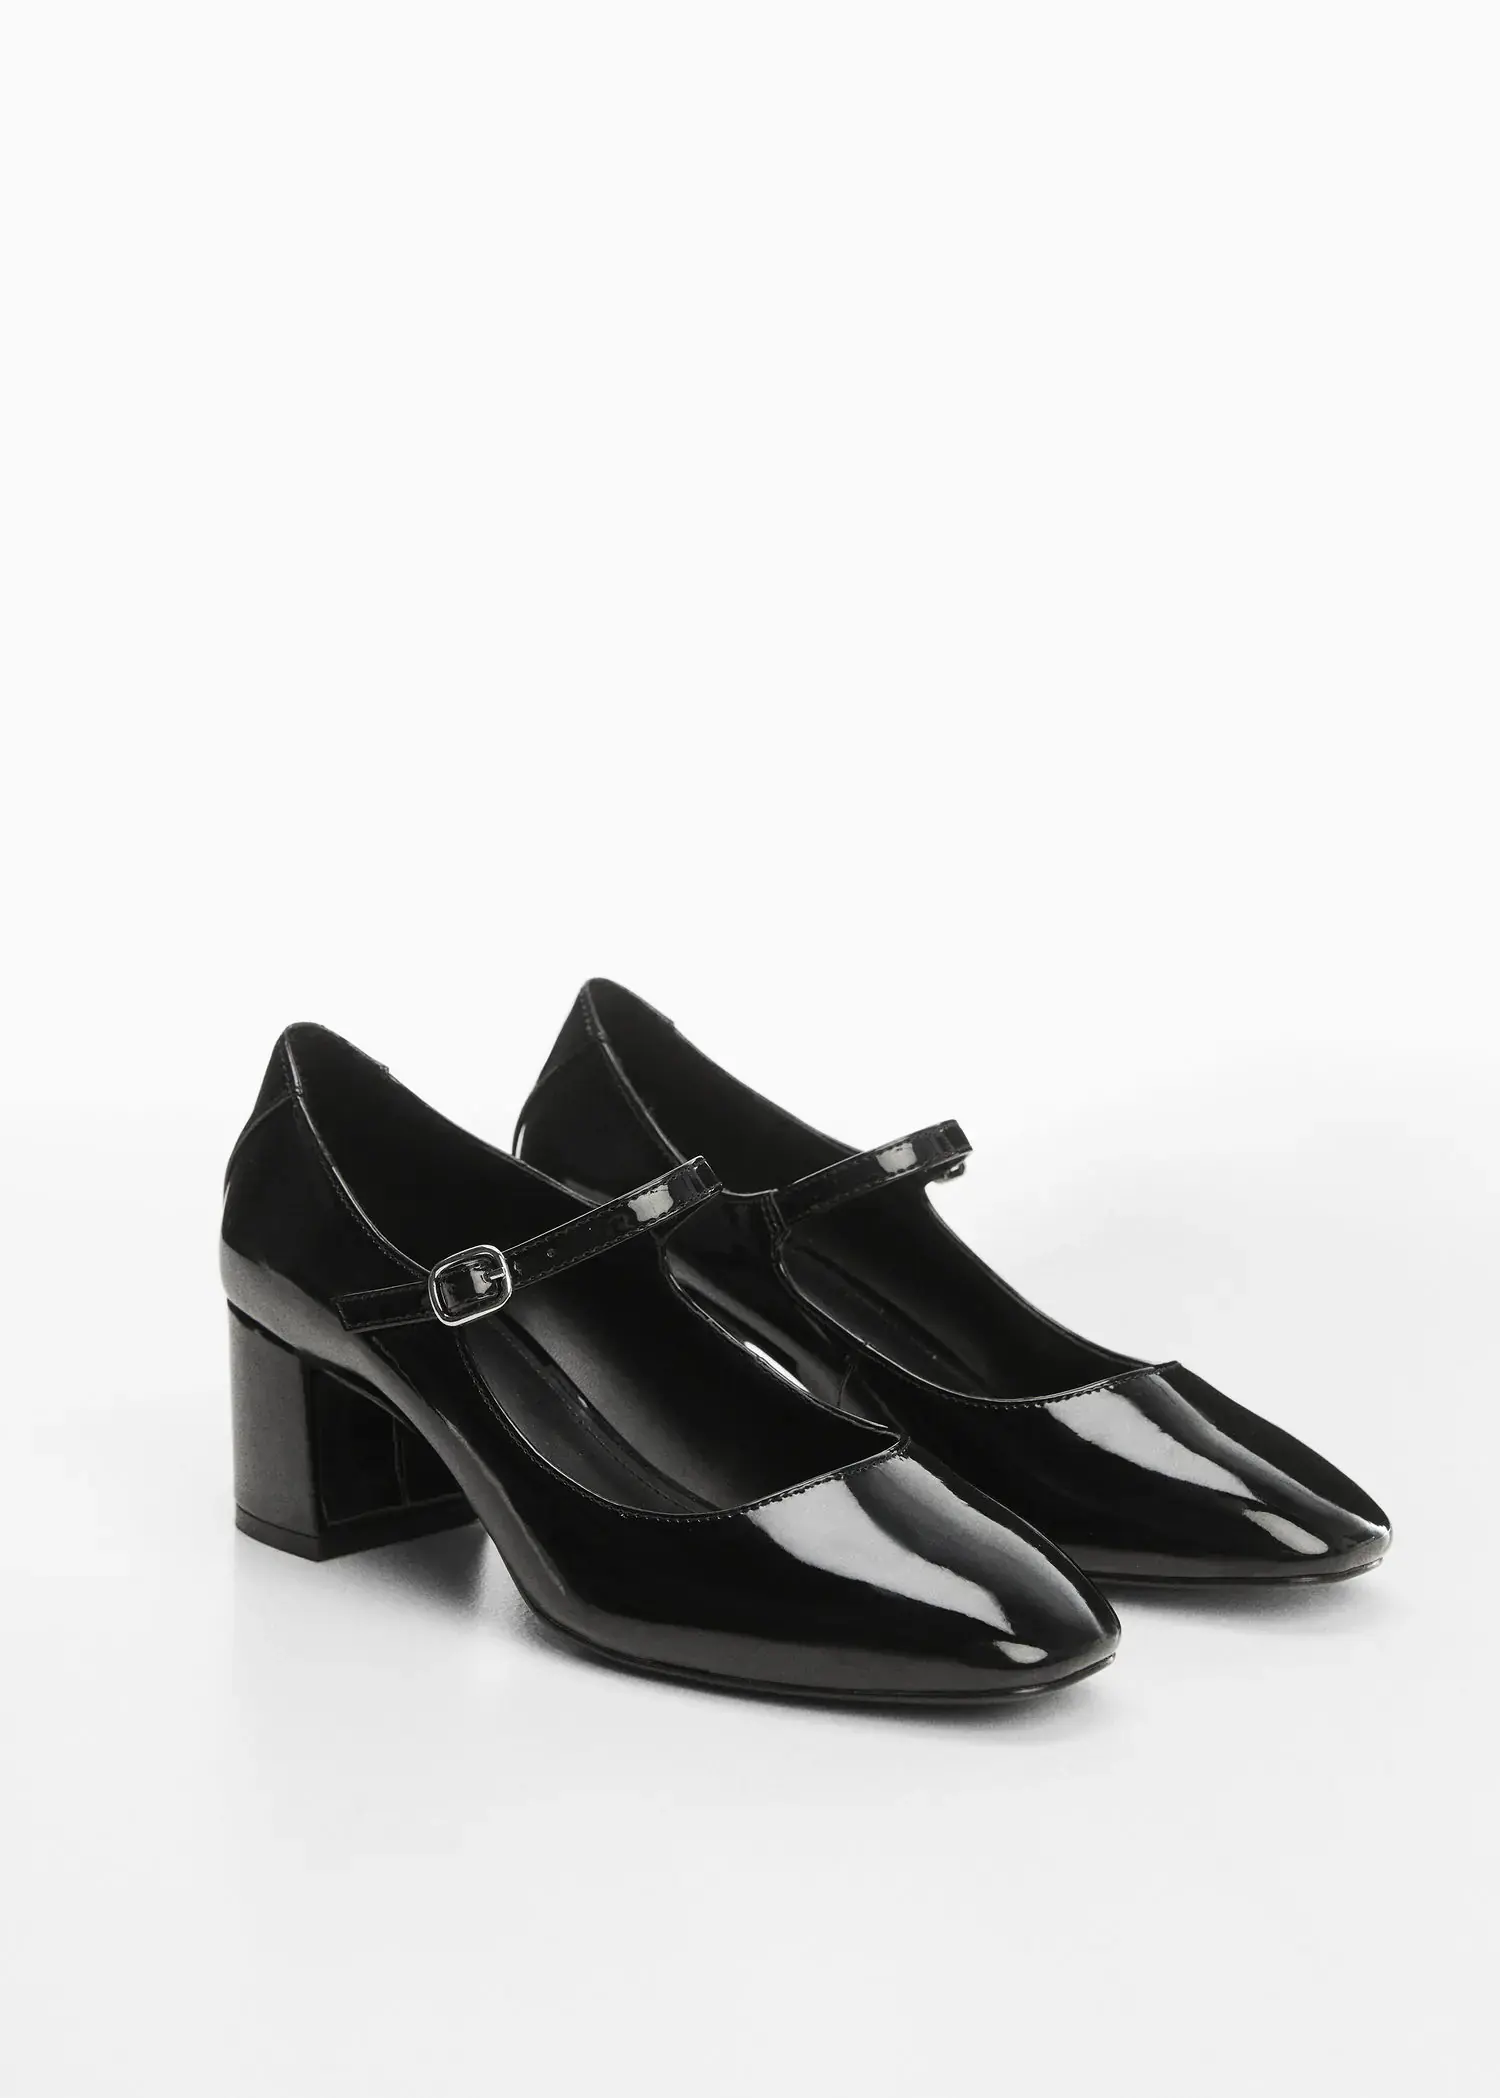 Mango Patent leather-effect heeled shoes. 2